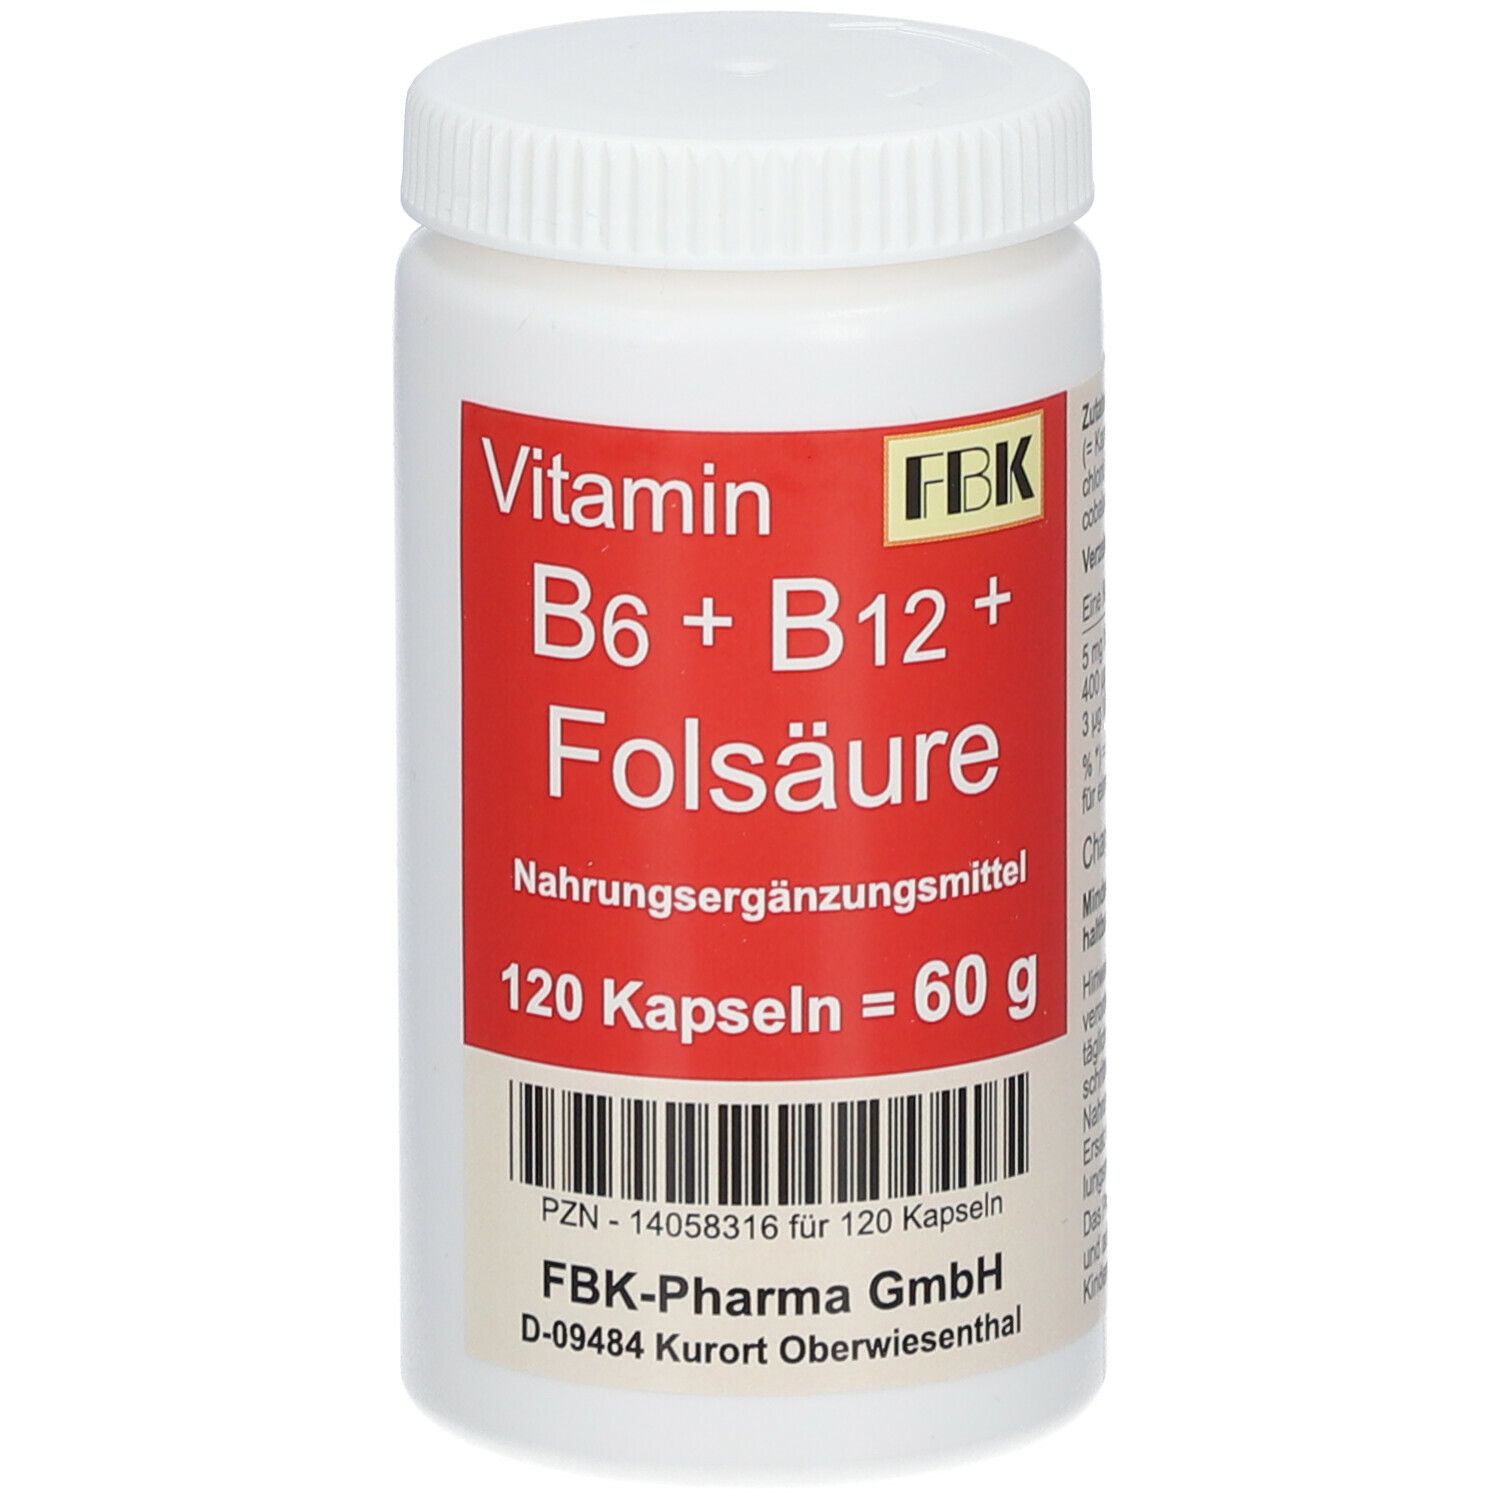 Vitamin B6+ B12+ Folsäure